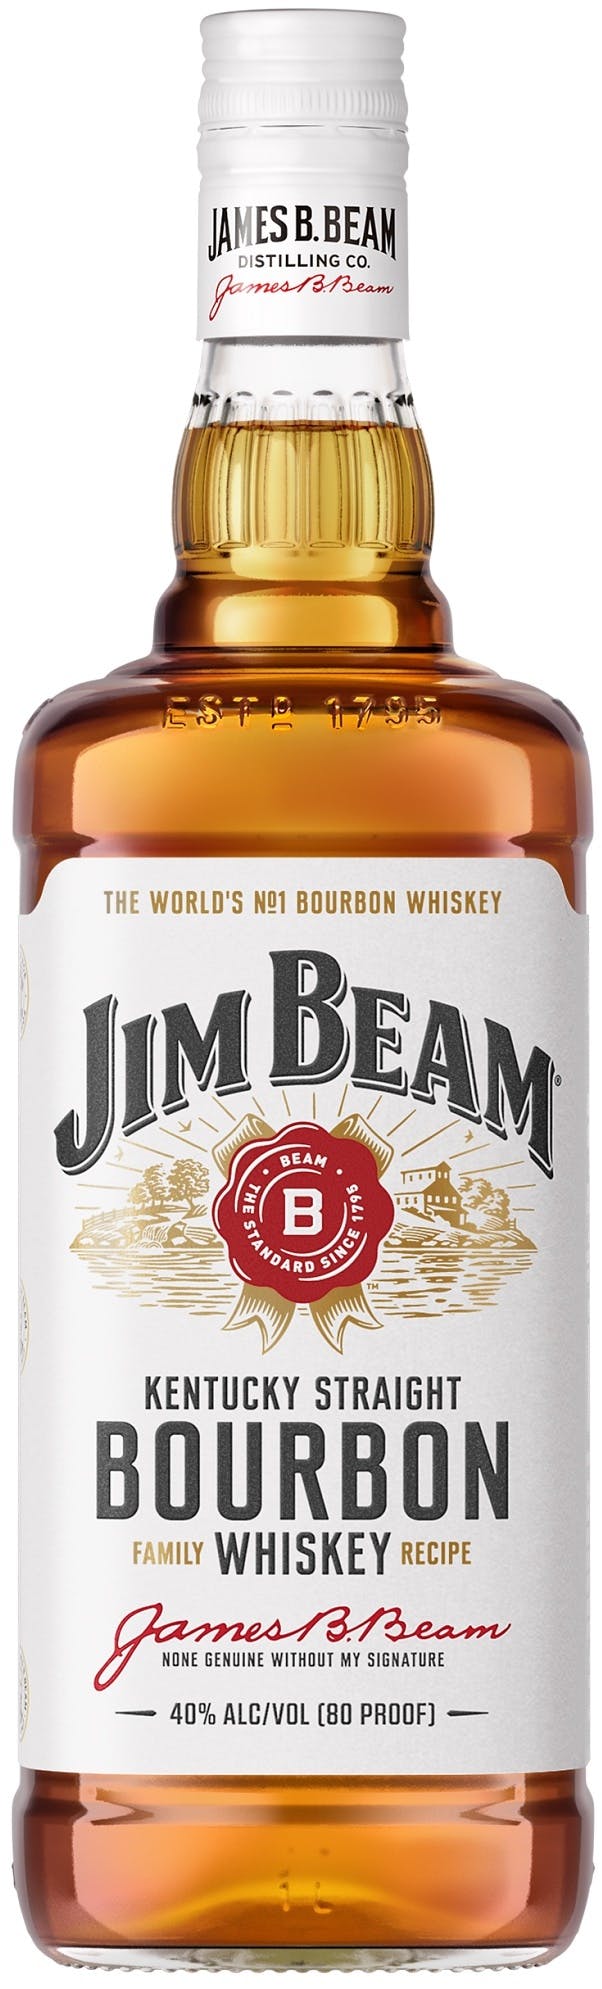 Jim Beam Kentucky Straight Bourbon Whiskey 4 year old 1L - Morton